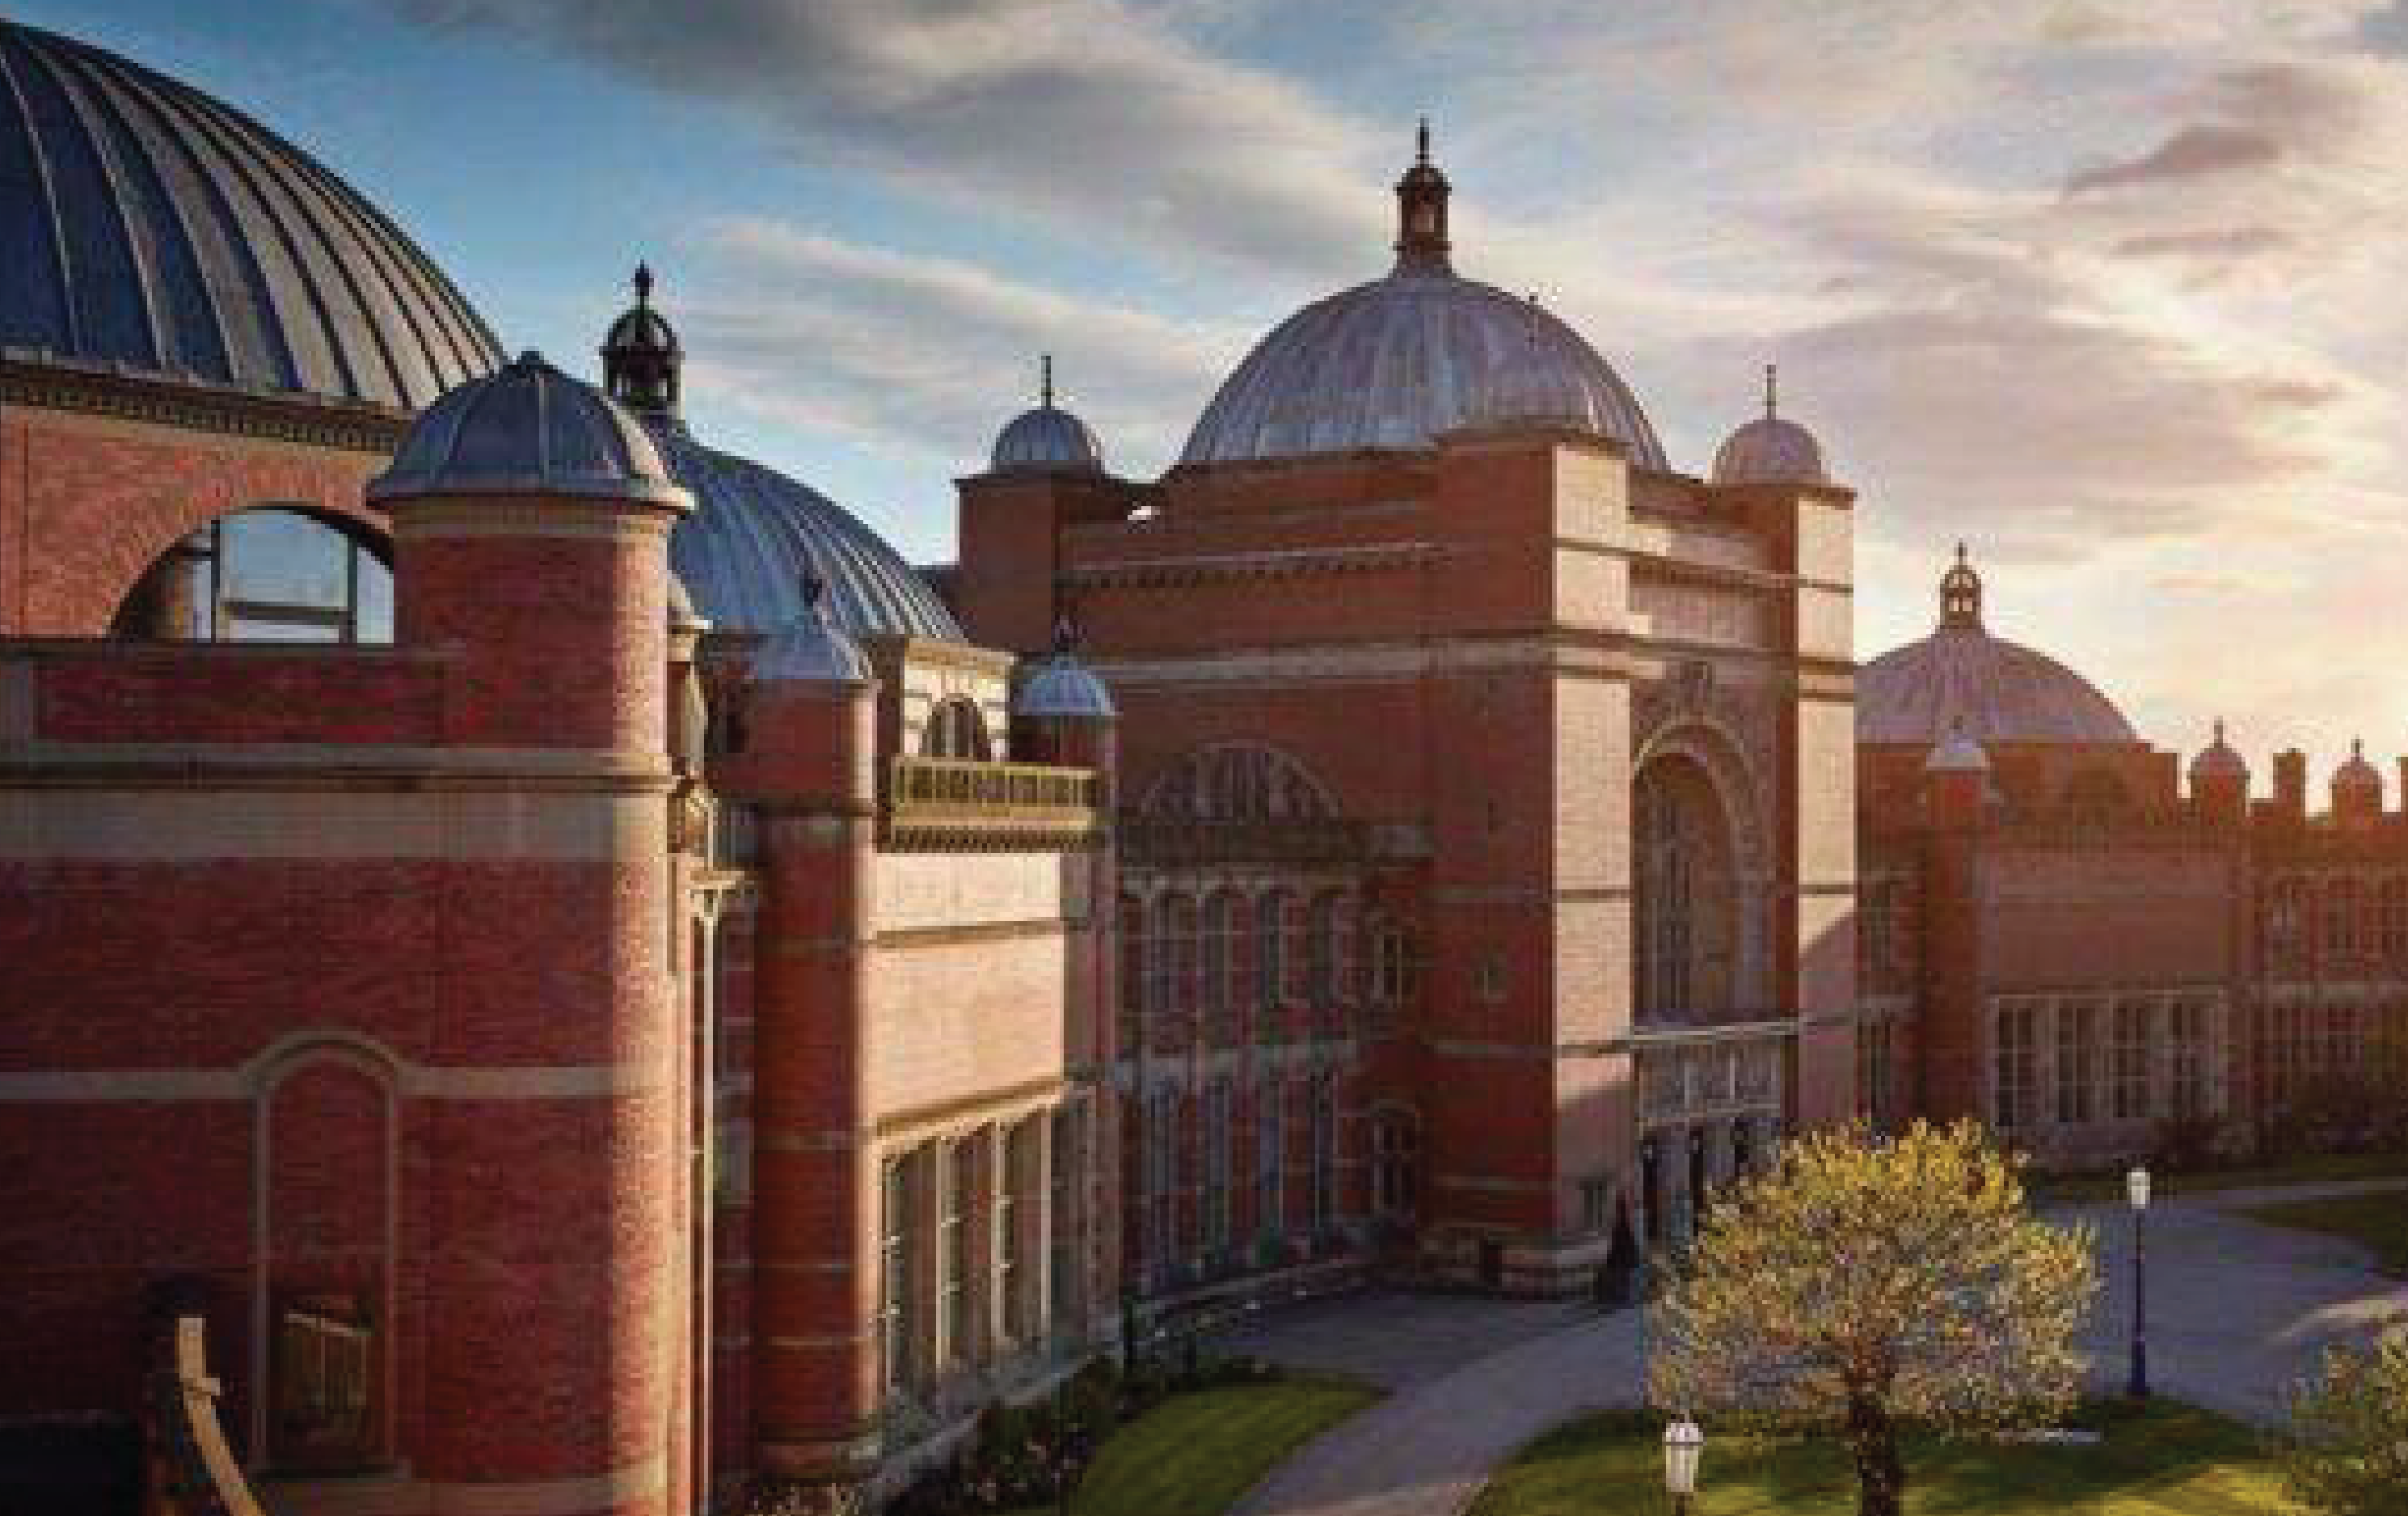 Post study work visa key reason attracting international students to UK University of Birminghams Chancellor 1